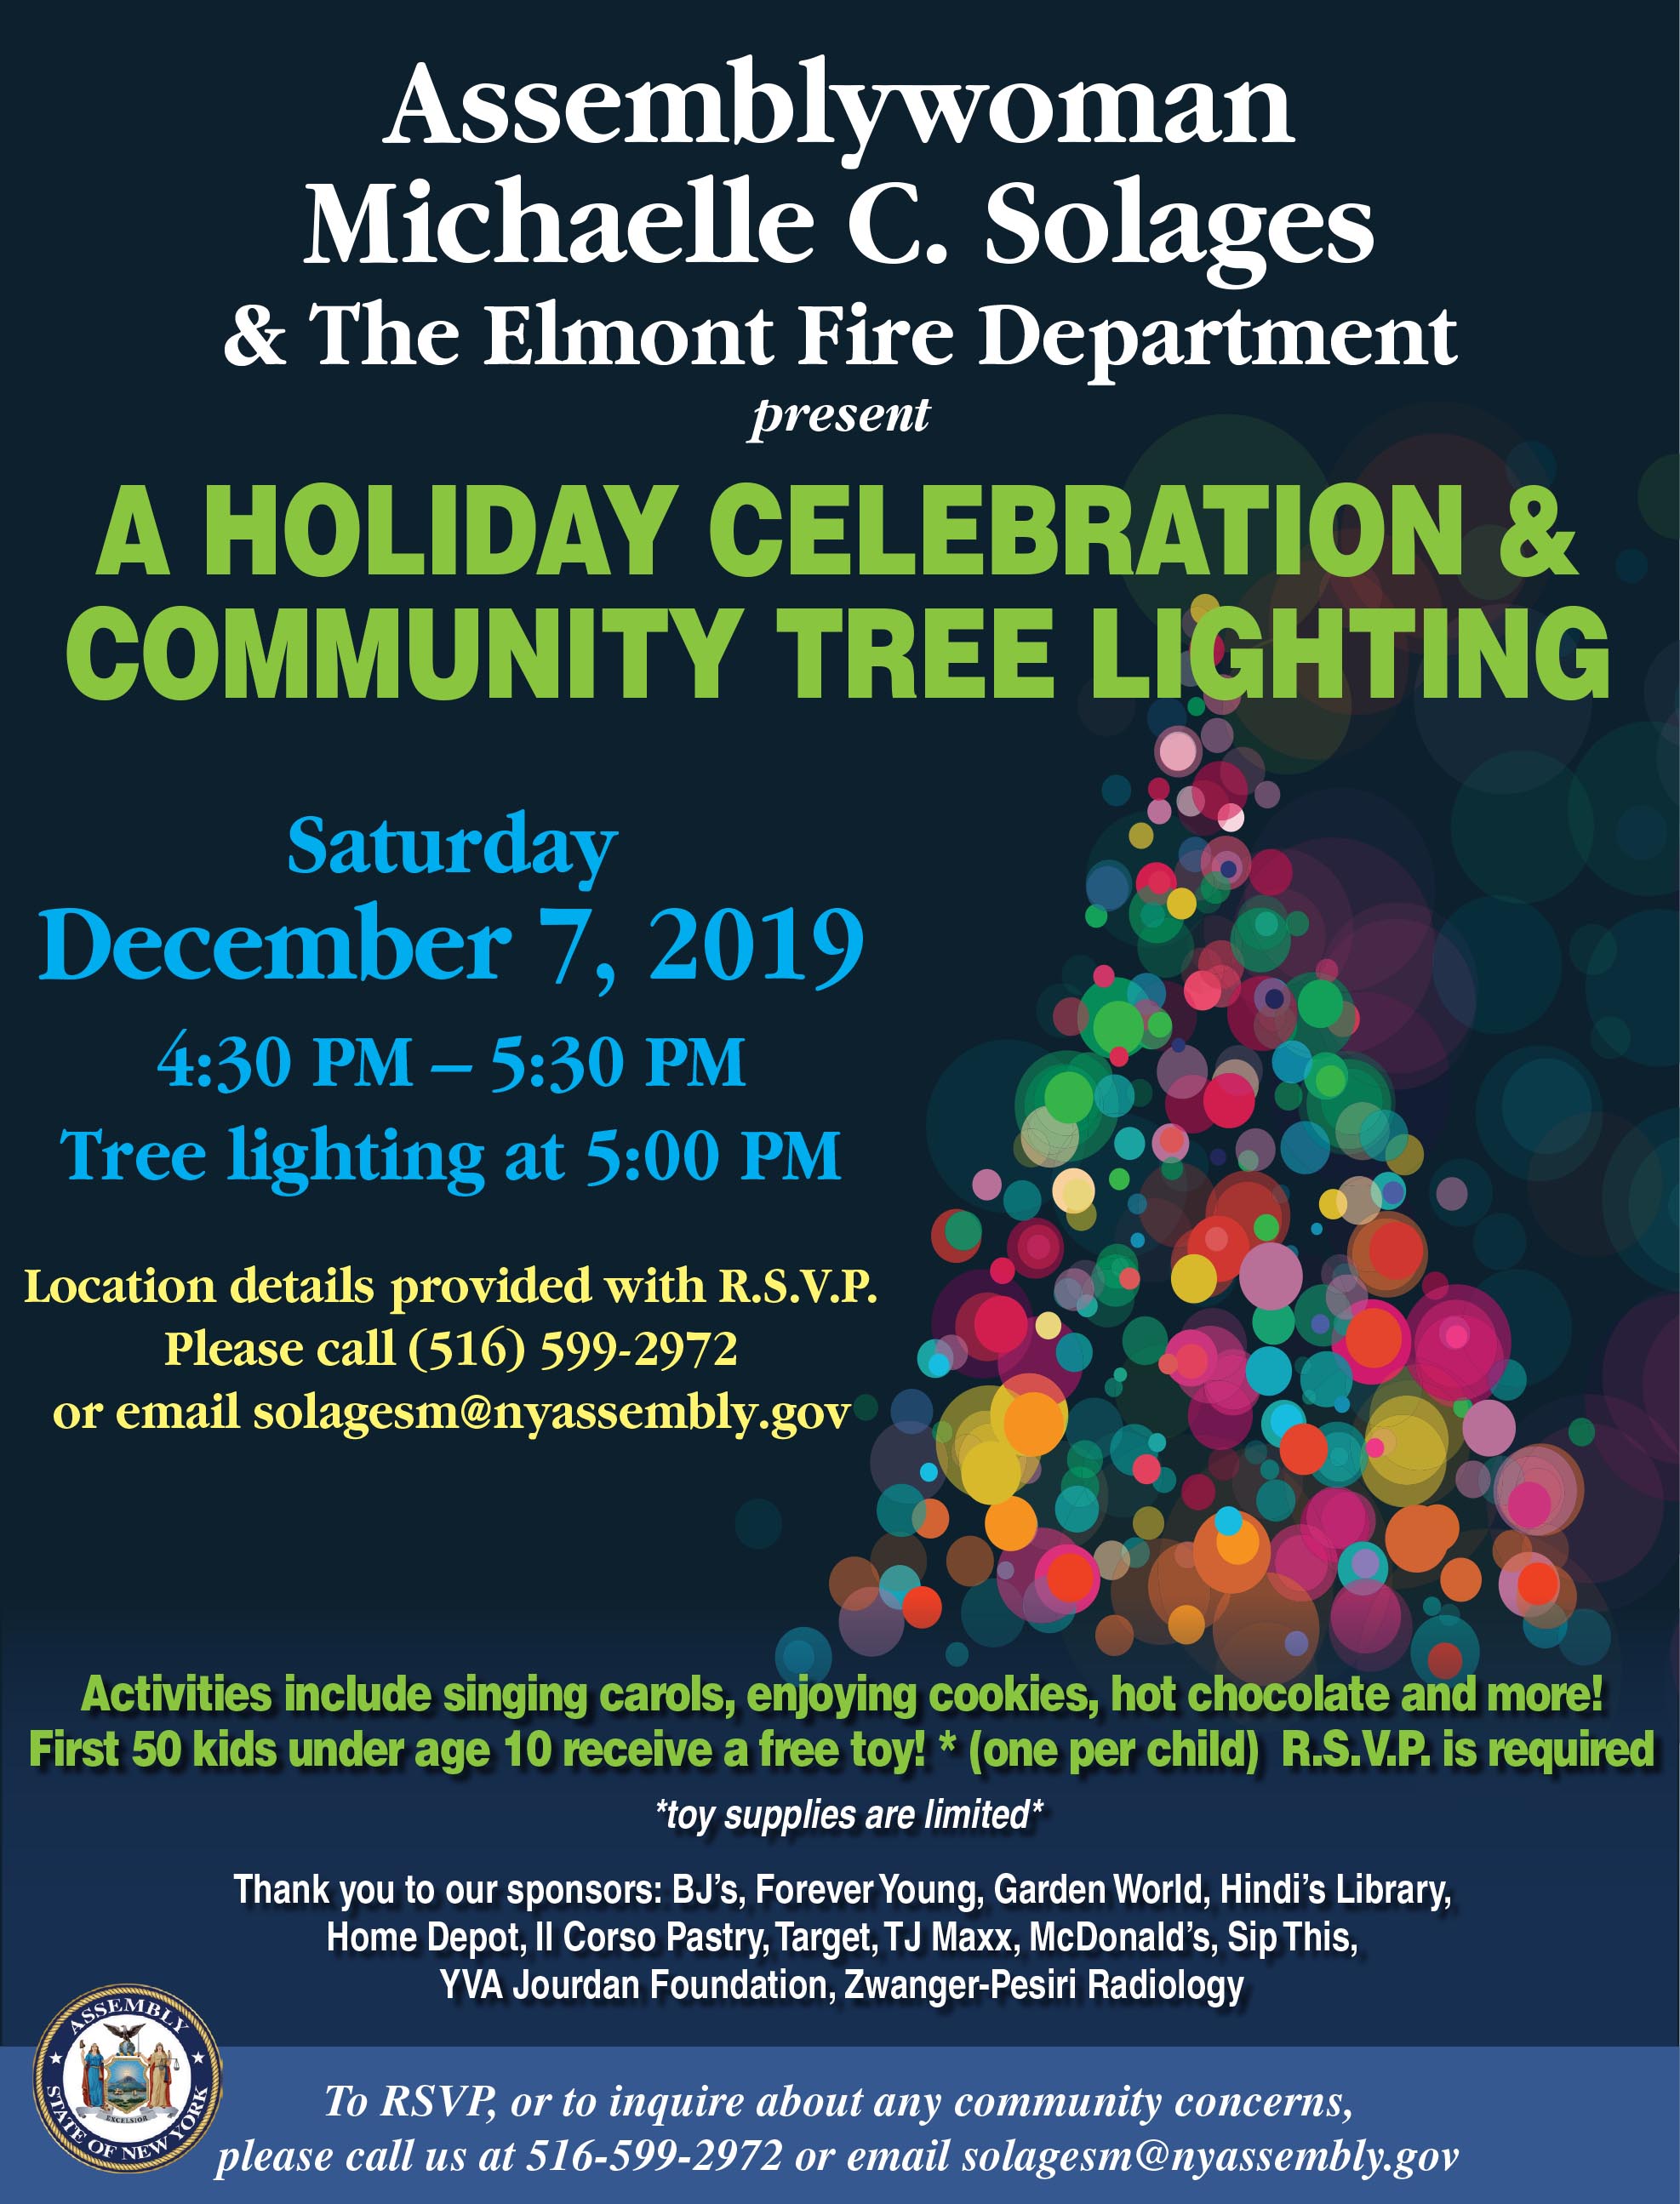 A Holiday Celebration & Community Tree Lighting